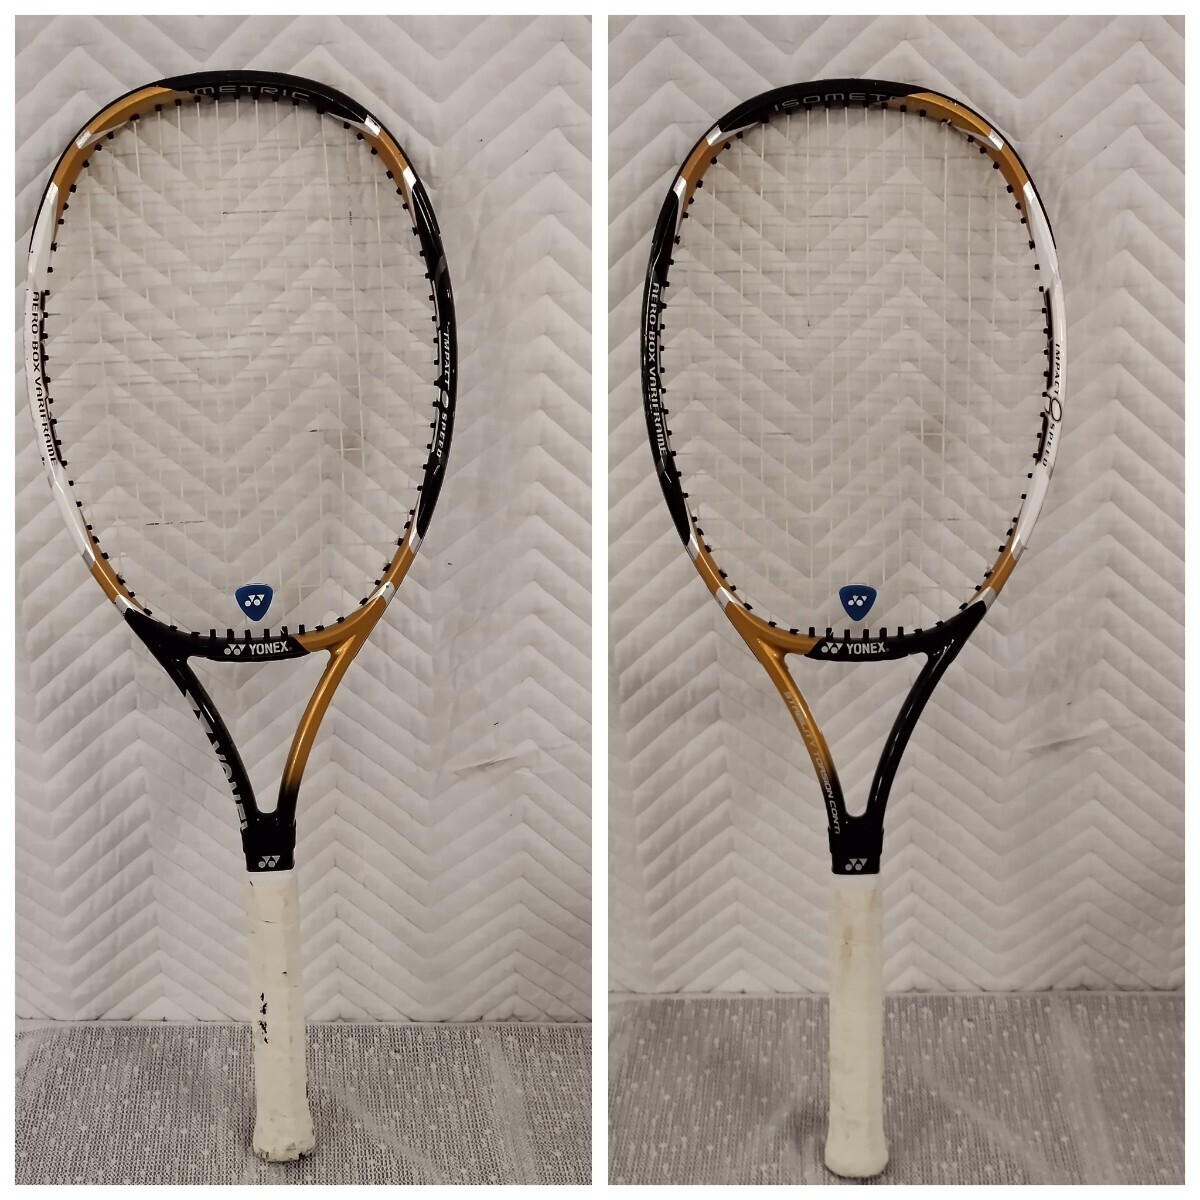 NR1021 tennis racket YONEX racket Yonex PRINCE Prince BRIDGESTONE Bridgestone Daiwa Daiwa 3 point set 